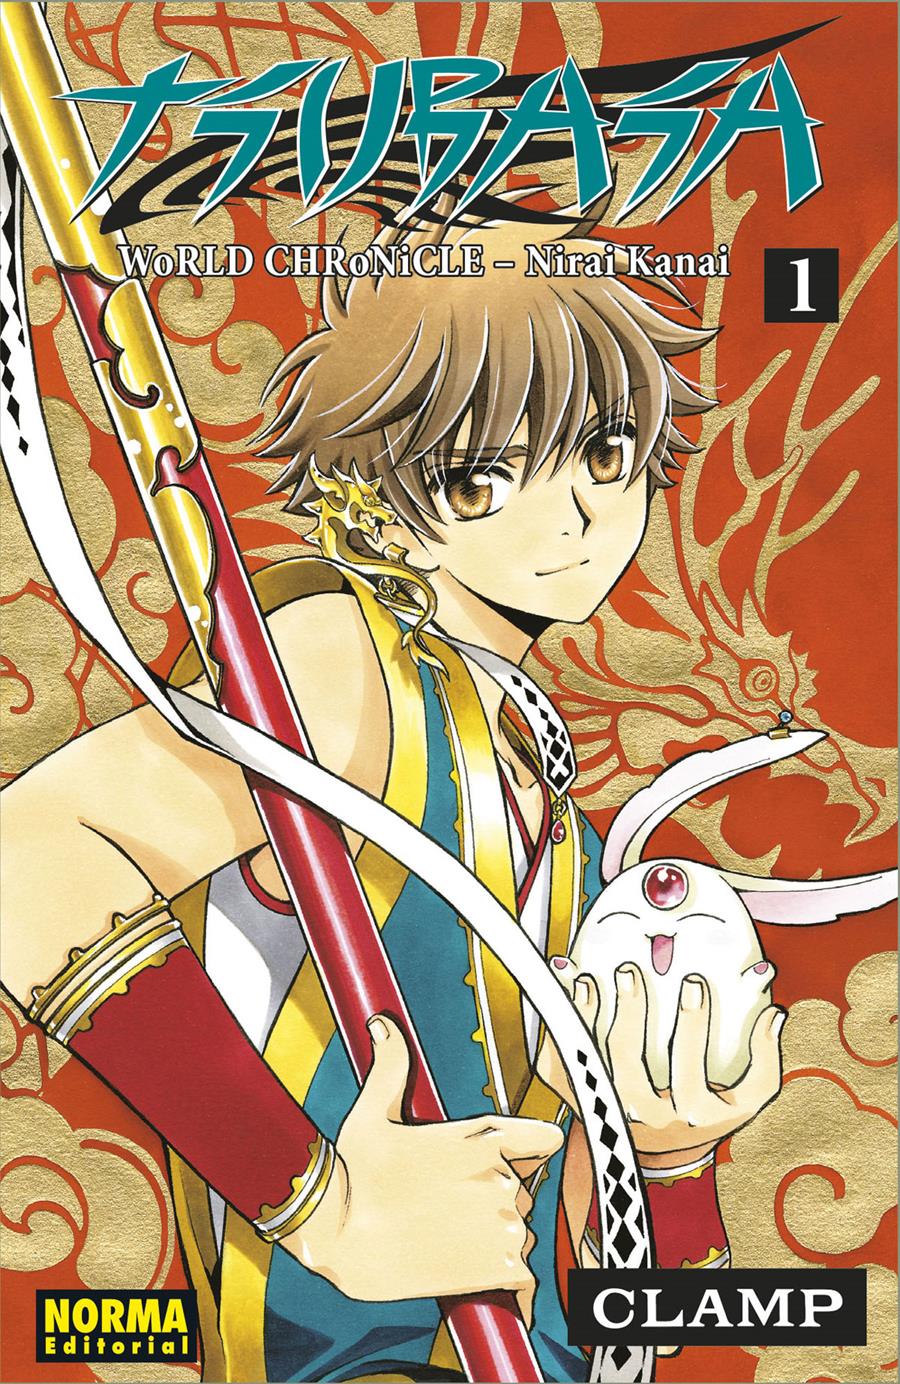 Tsubasa World Chronicle: Nirai Kanai completa | N0821-NOR16 | Clamp | Terra de Còmic - Tu tienda de cómics online especializada en cómics, manga y merchandising